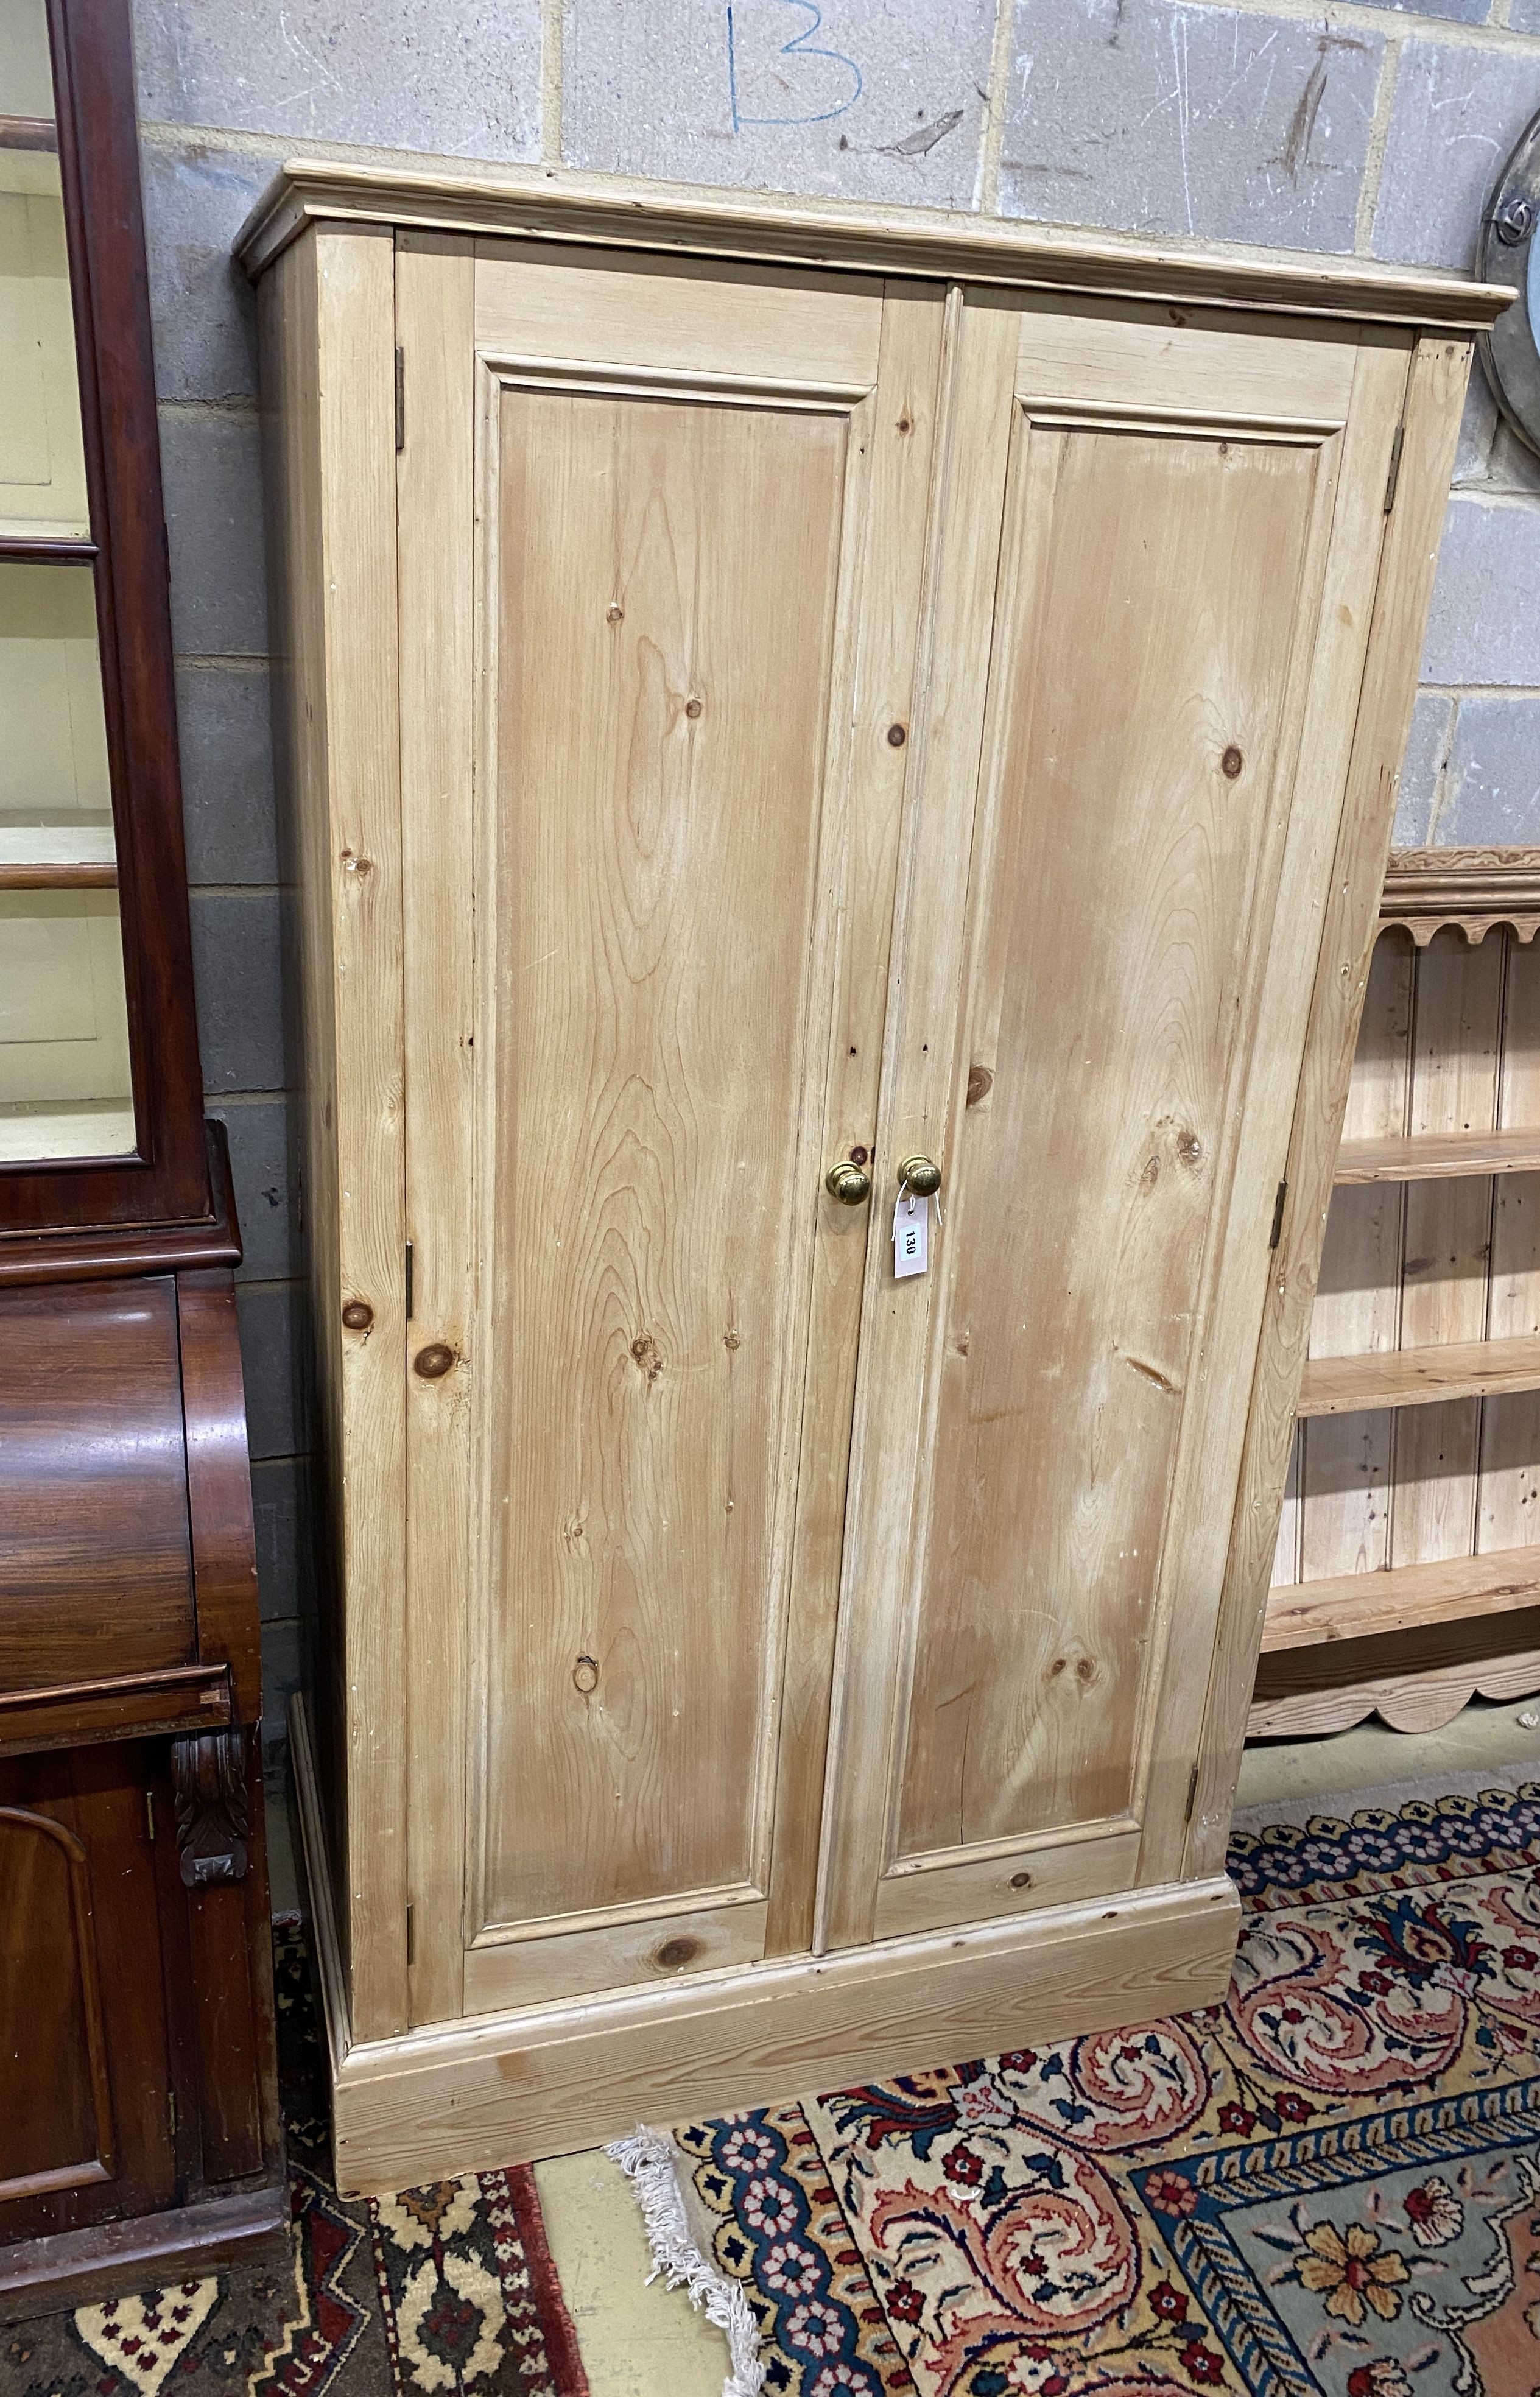 A small Victorian pine wardrobe, width 96cm, depth 59cm, height 174cm